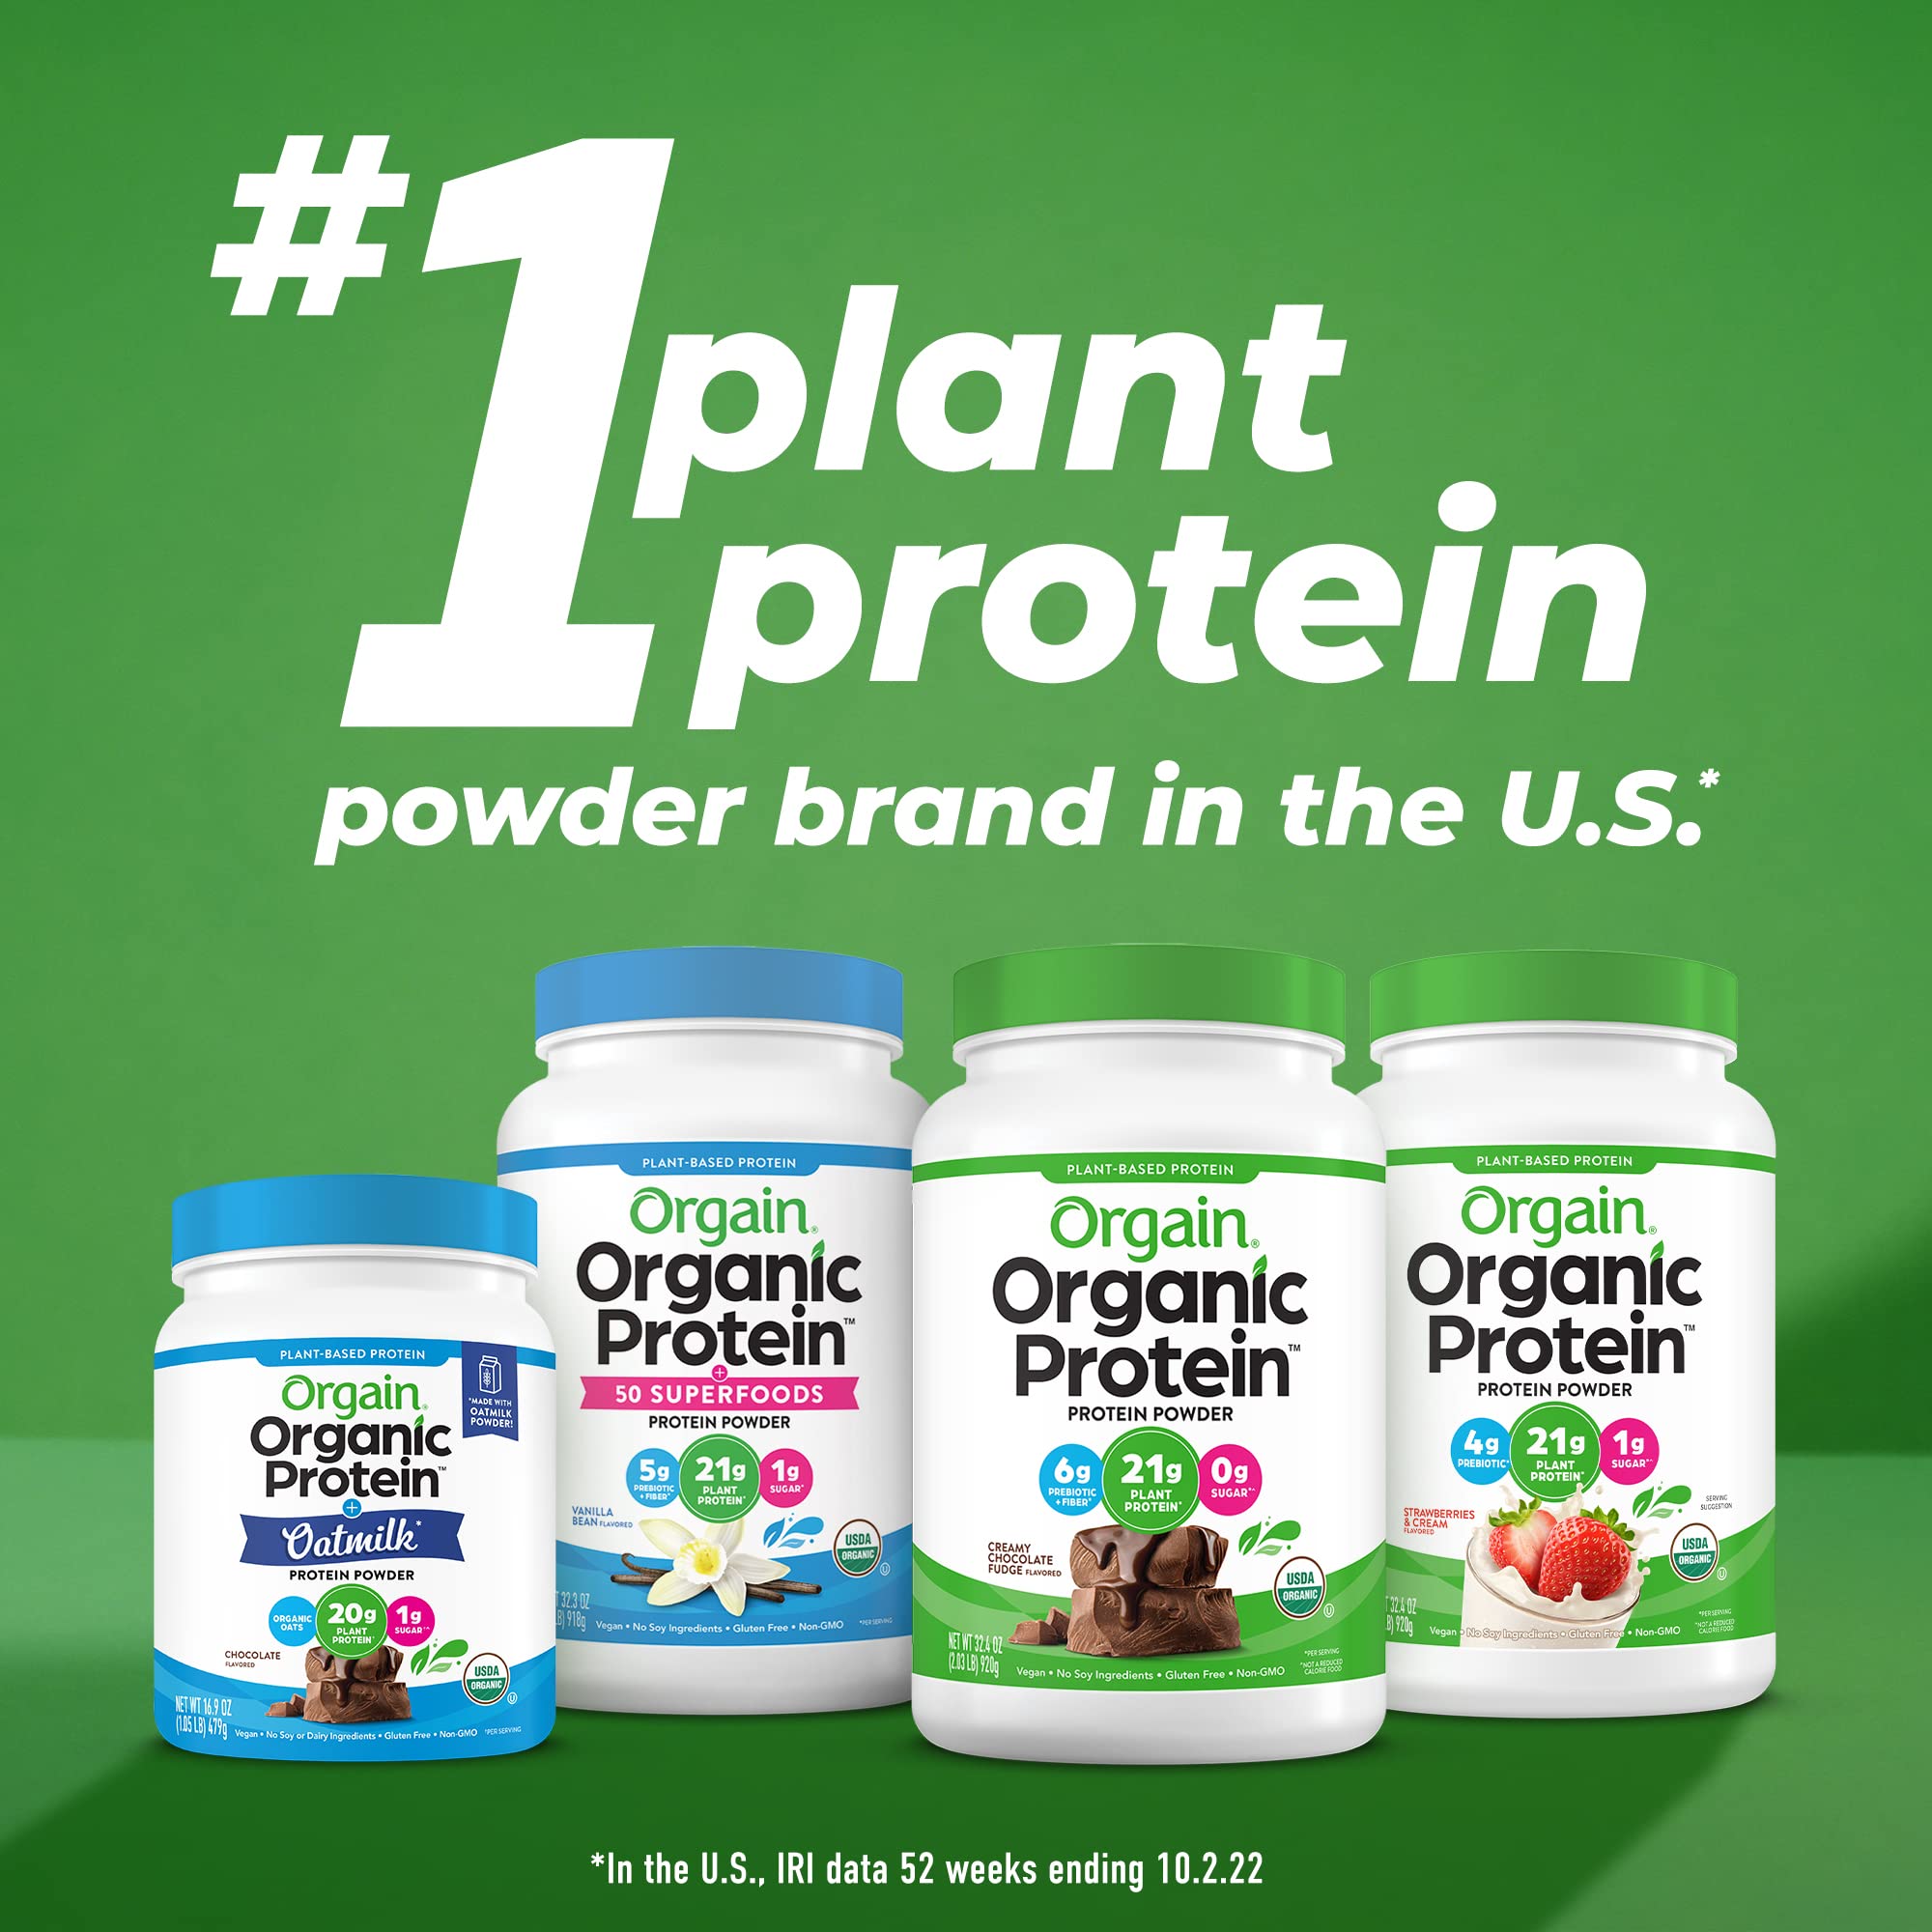 Orgain Organic Vegan Protein Powder, Creamy Chocolate Fudge - 21g Plant Based Protein, Gluten Free, Dairy Free, Lactose Free, Soy Free, No Sugar Added, Kosher, For Smoothies & Shakes - 2.03lb